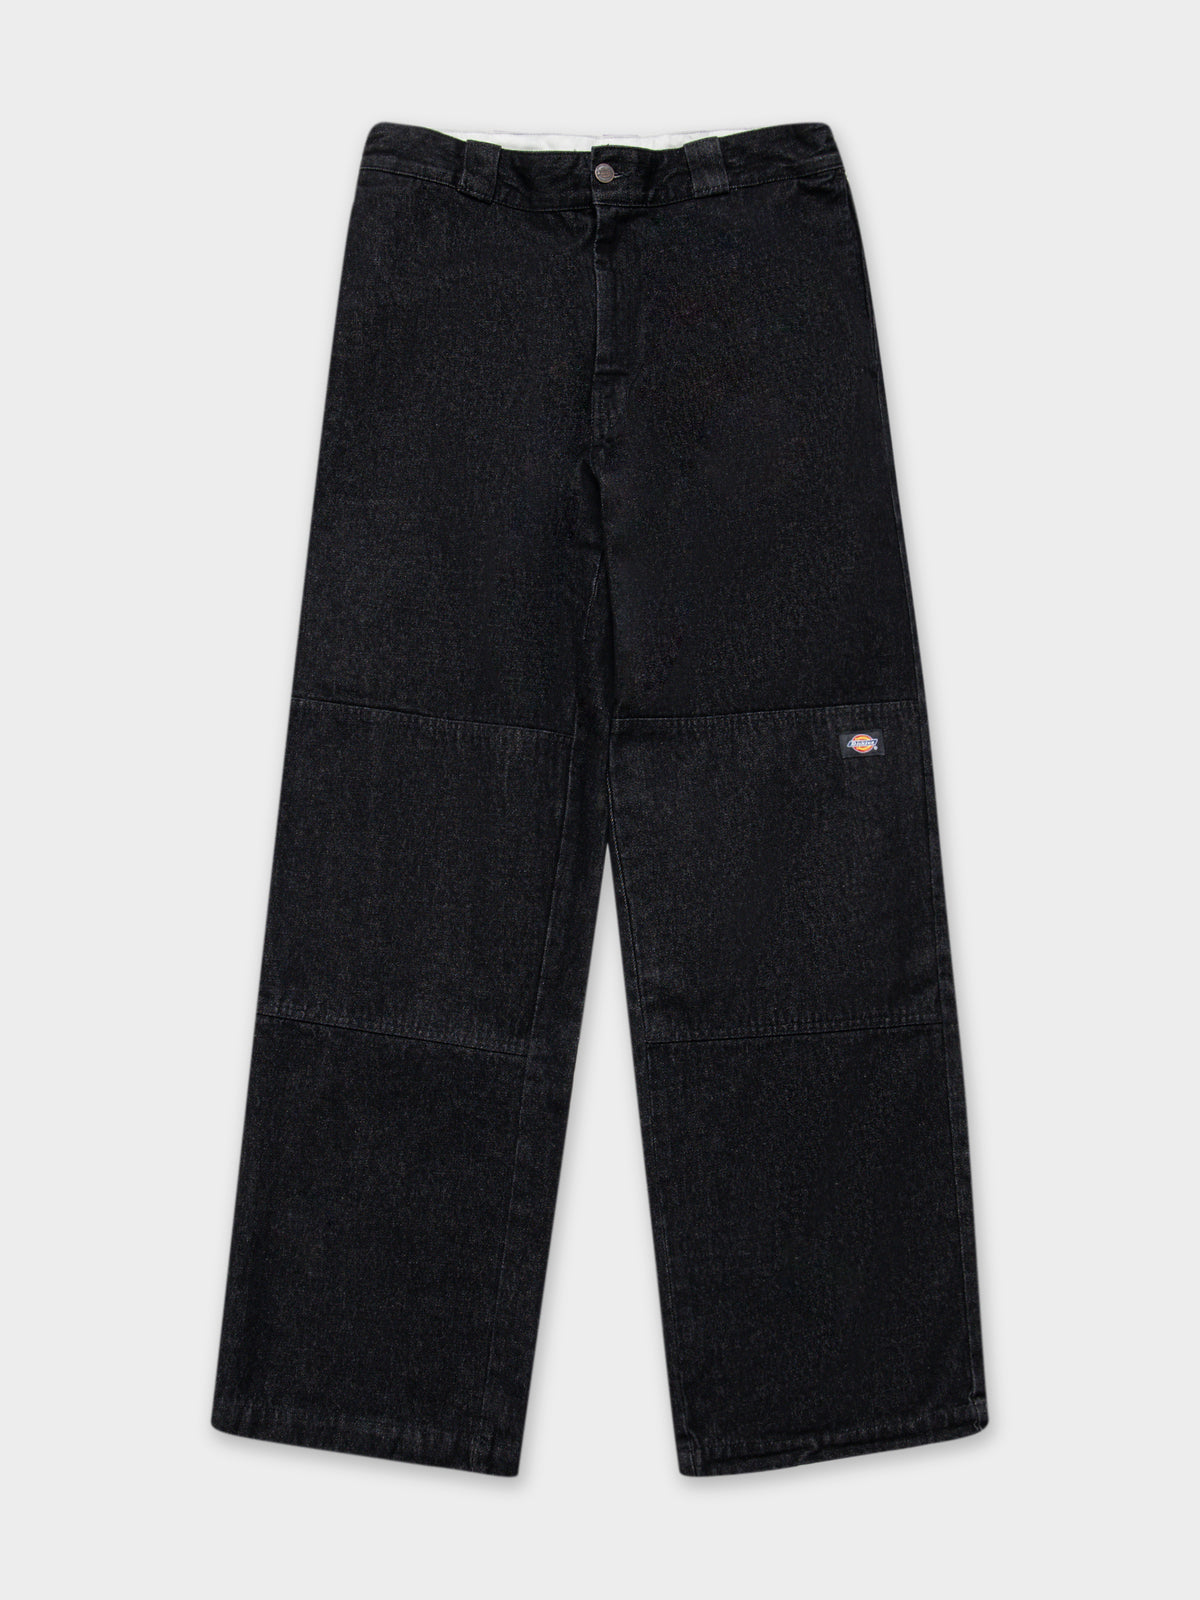 85-283 Double Knee Jeans in Black